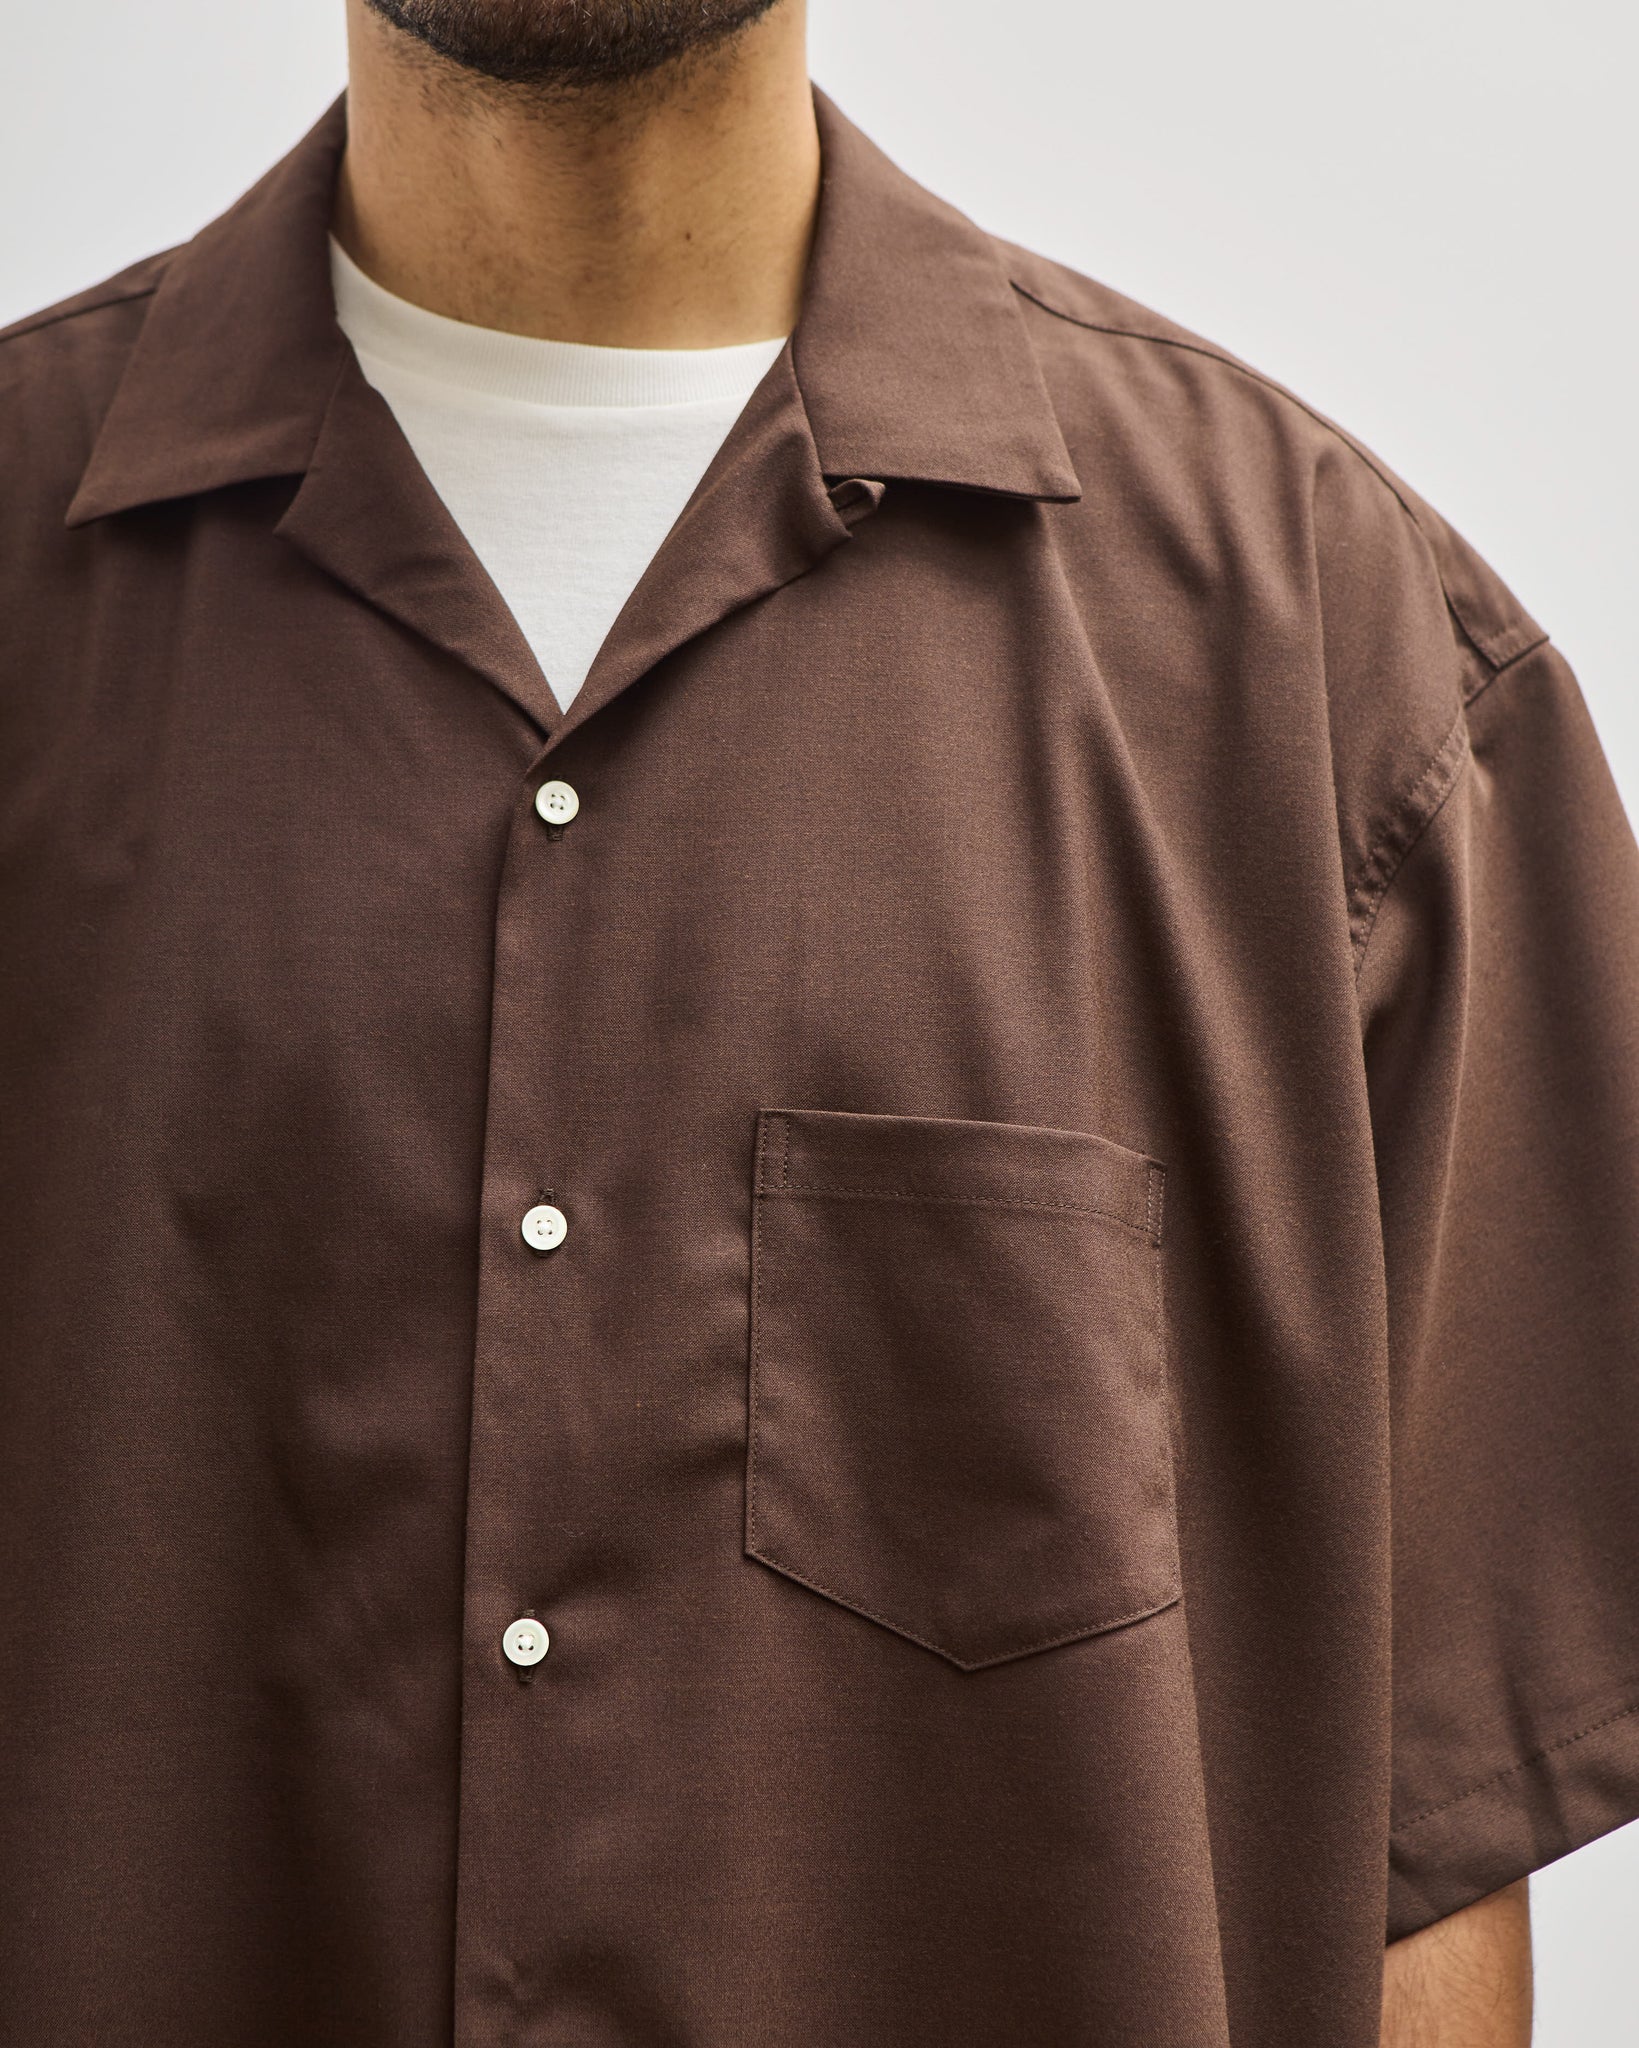 Sillage Overshirt Short, Brown